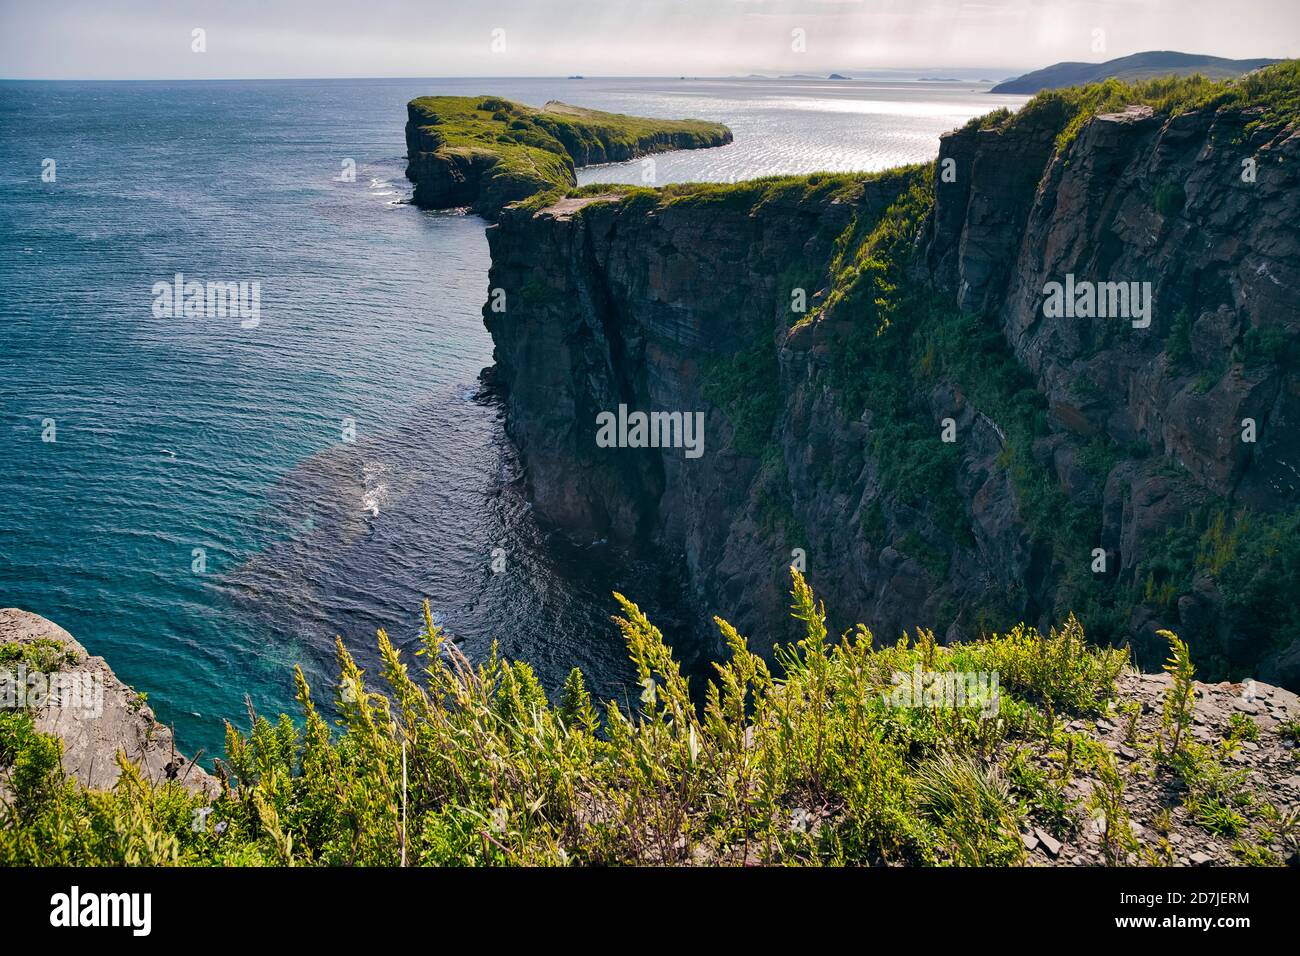 Tranquil scene of russky island at Vladivostok, Russia Stock Photo